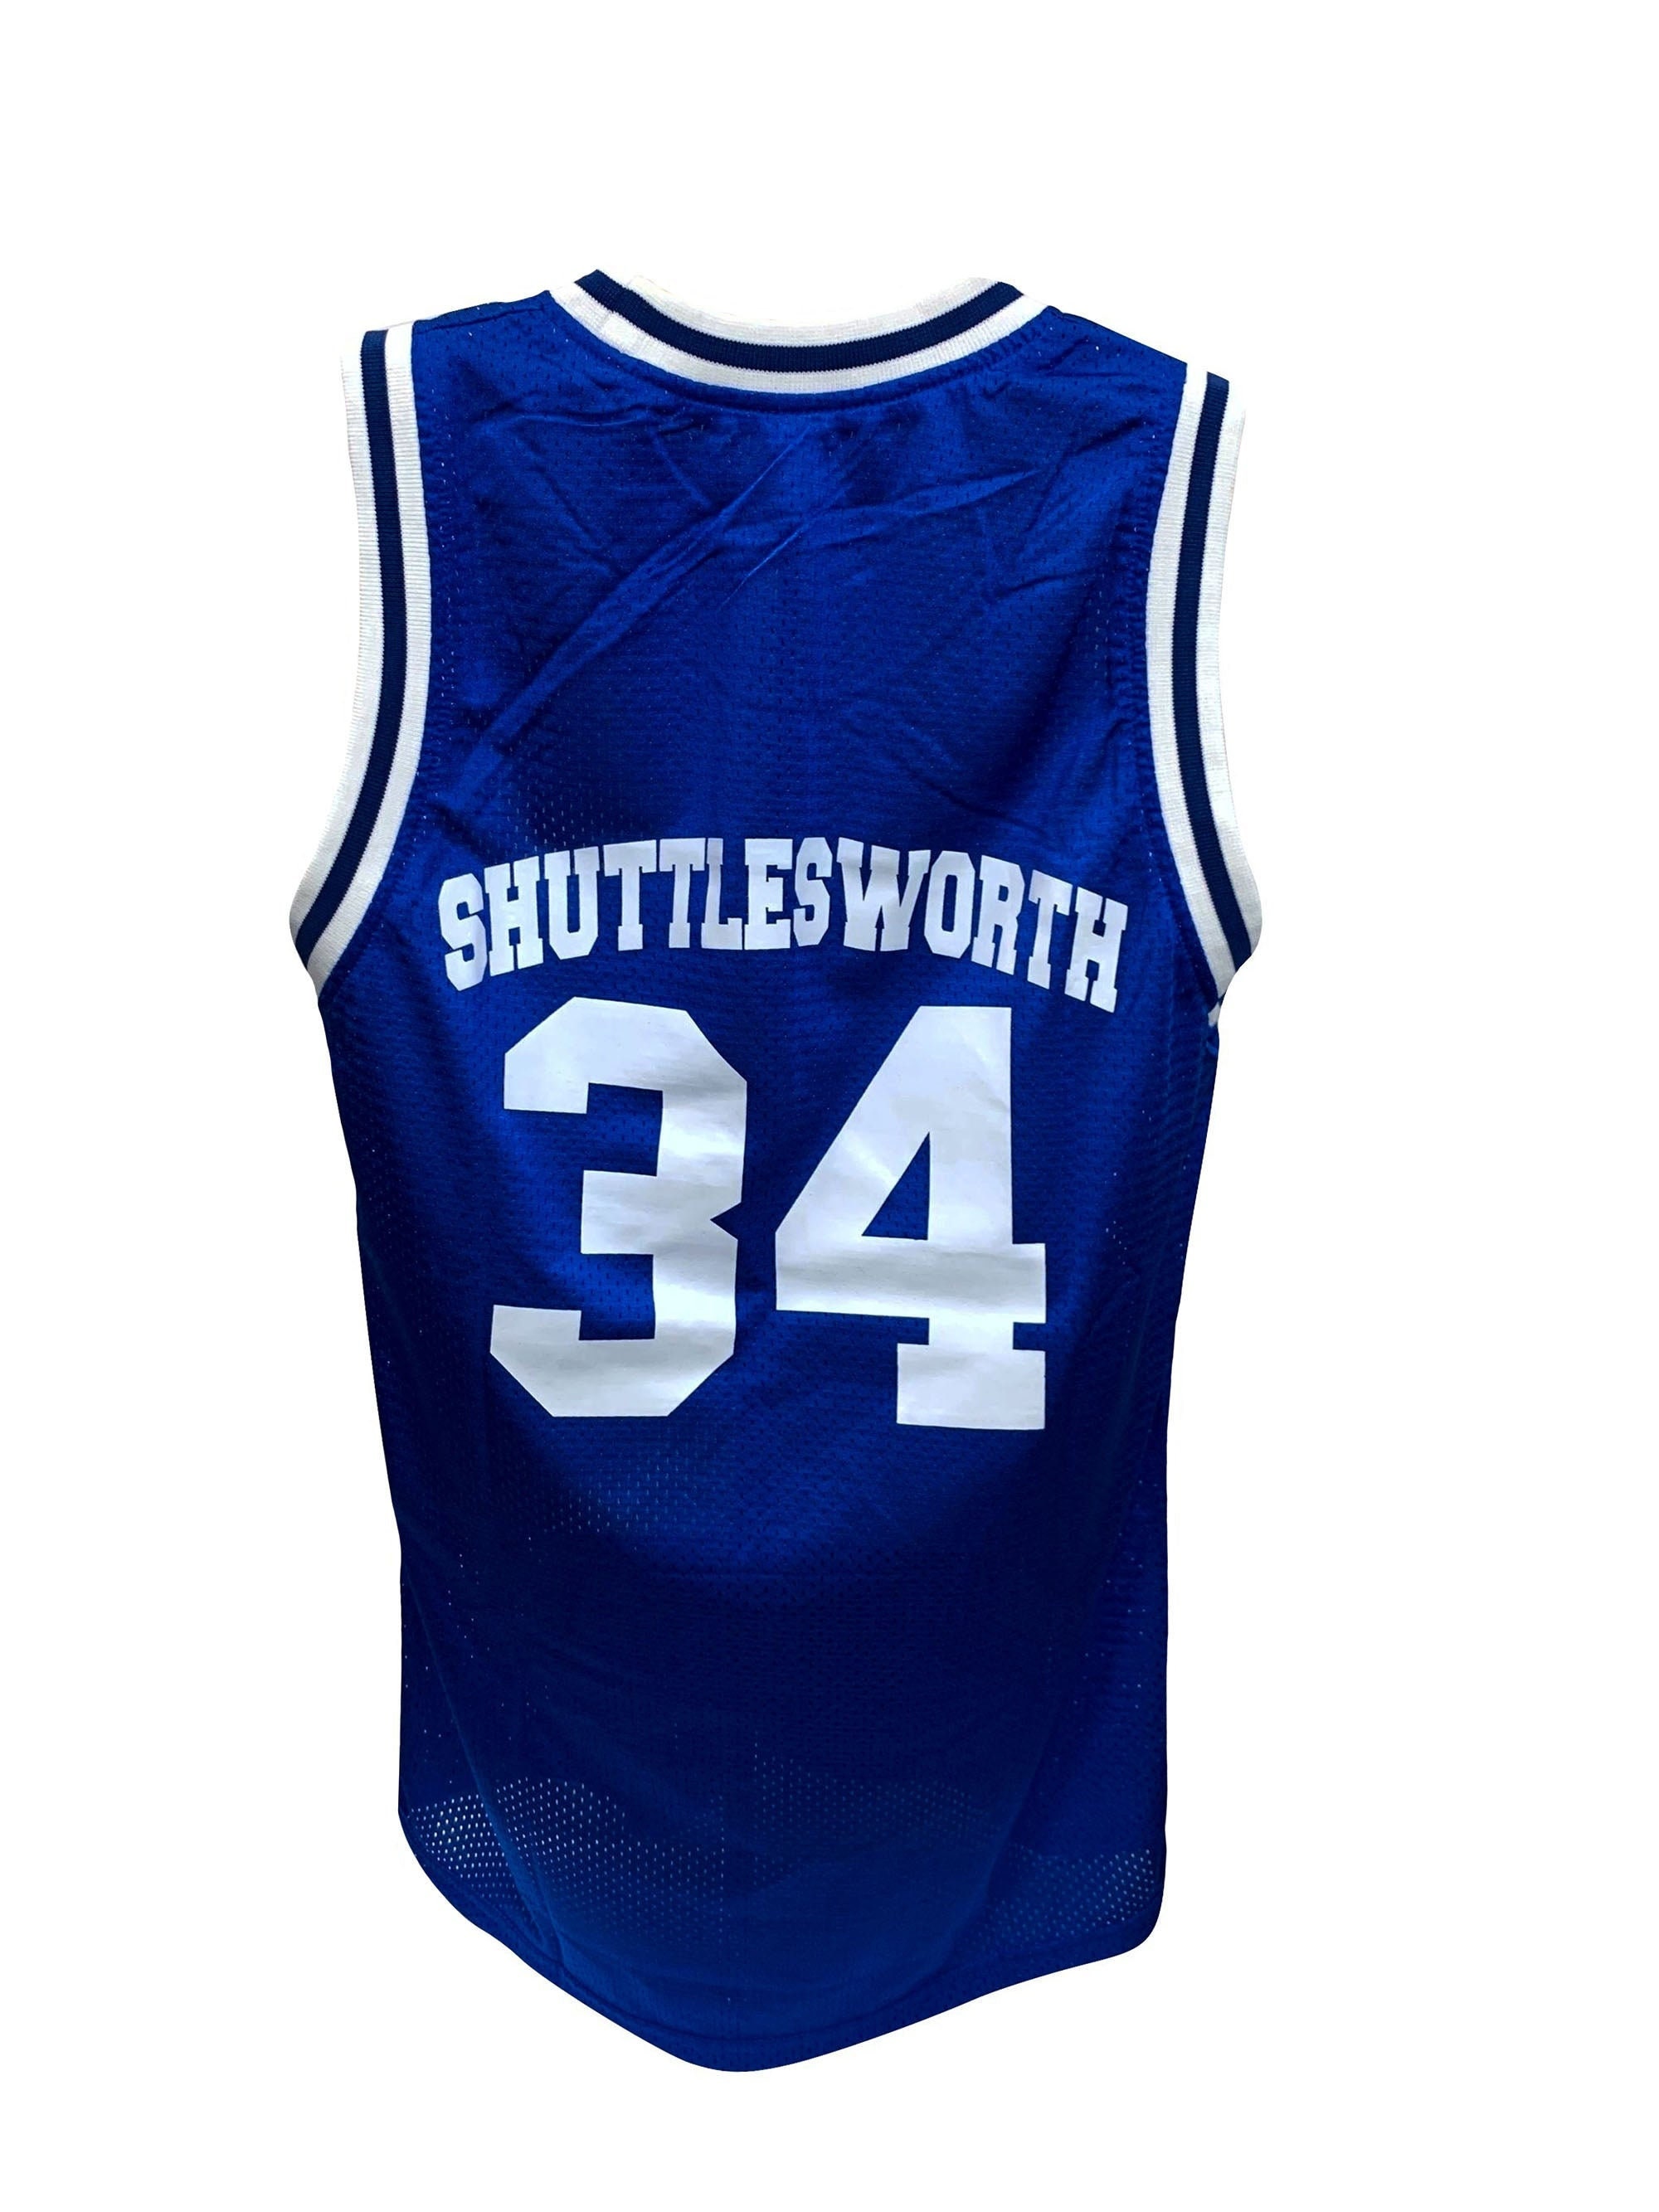 Jesus Shuttlesworth- He Got Game Jerseys